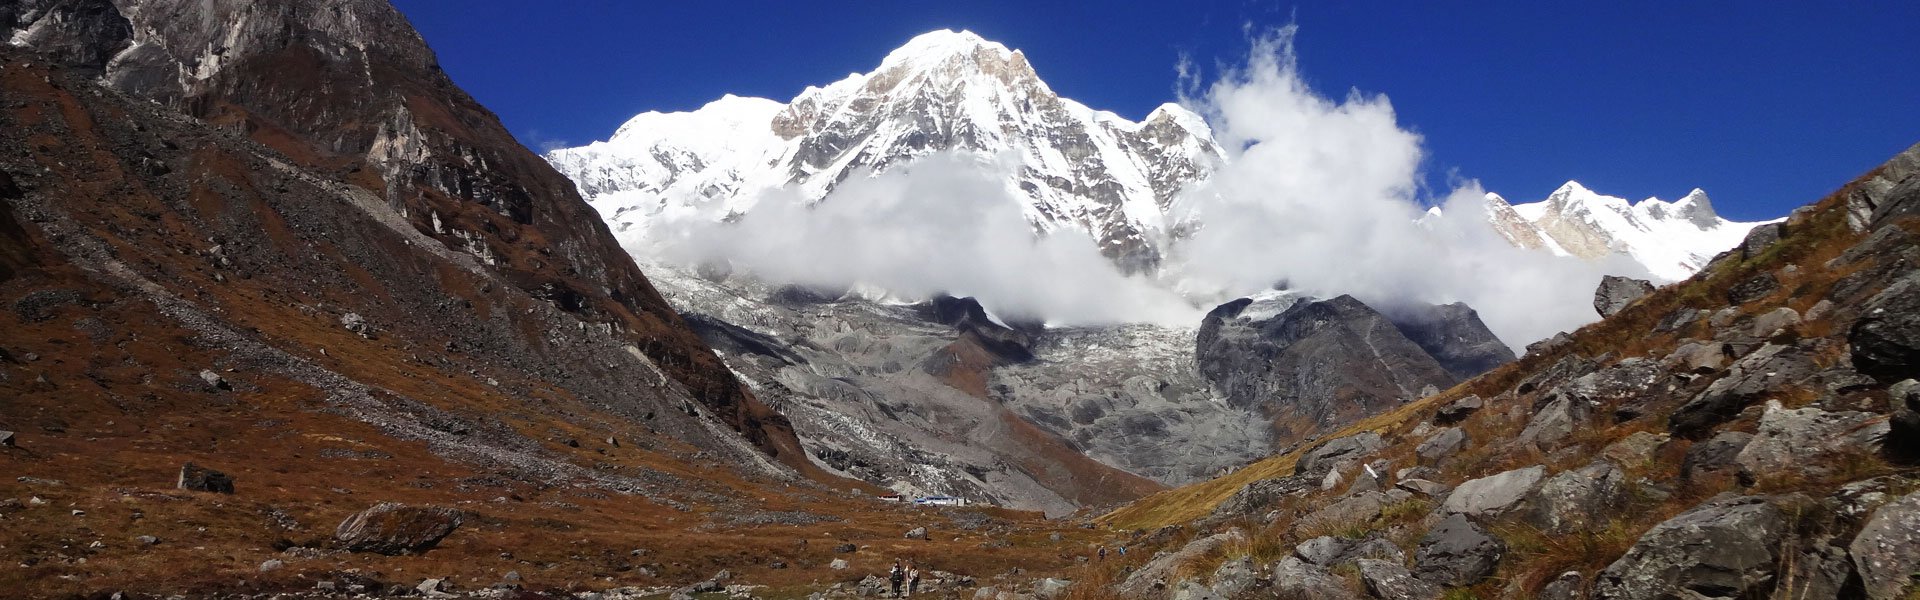 Trekking and adventure destinations in Nepal